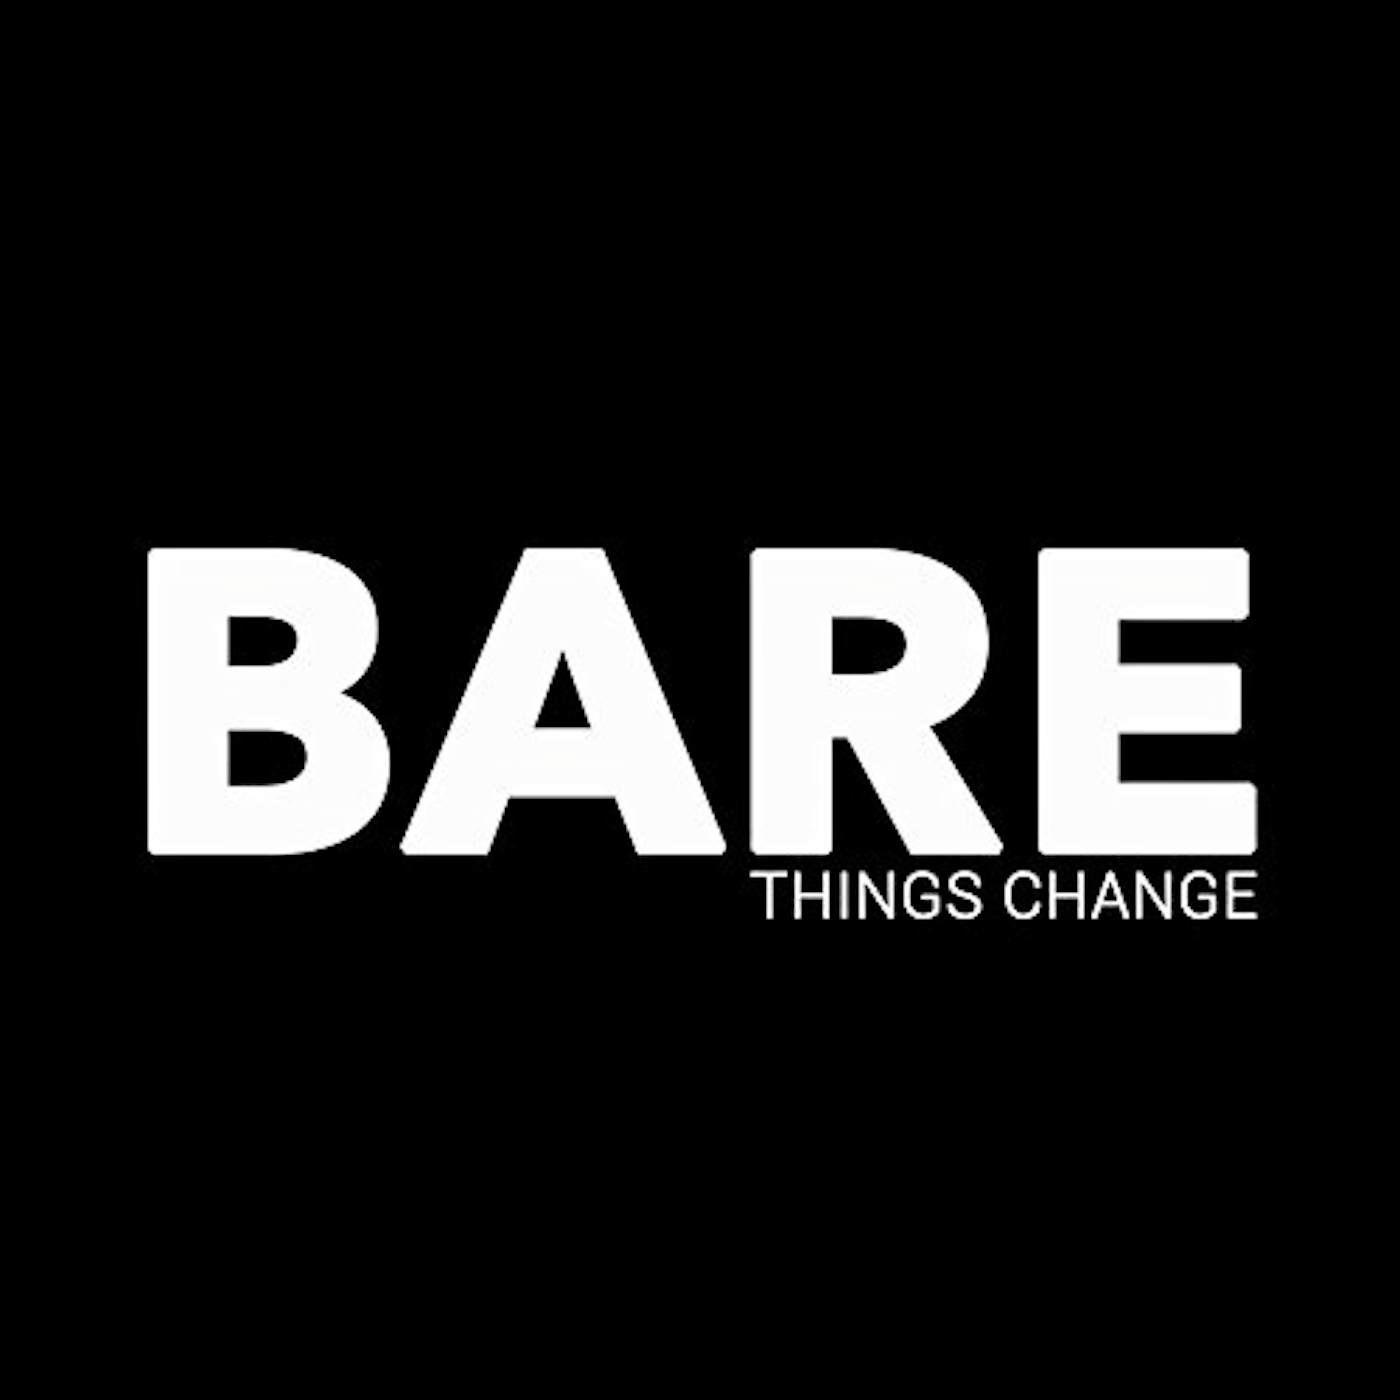 Bobby Bare THINGS CHANGE CD